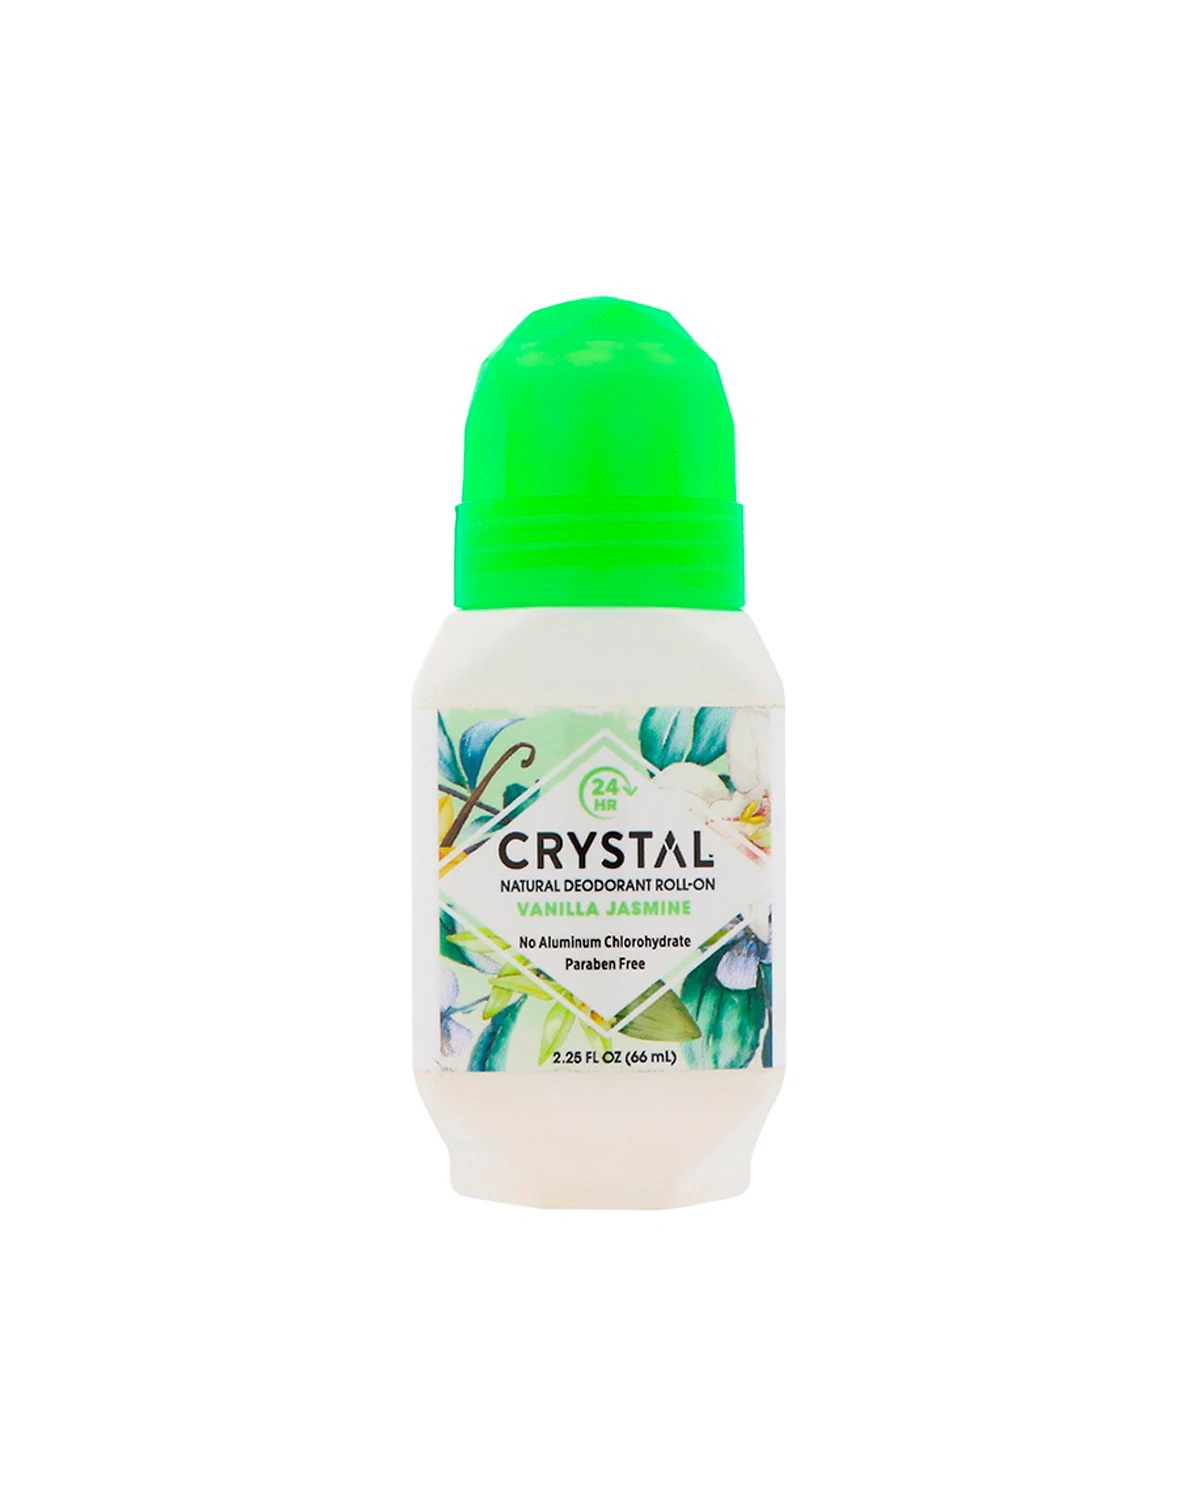 Шариковый дезодорант с ароматом ванили и жасмина | 66 мл Crystal Body Deodorant